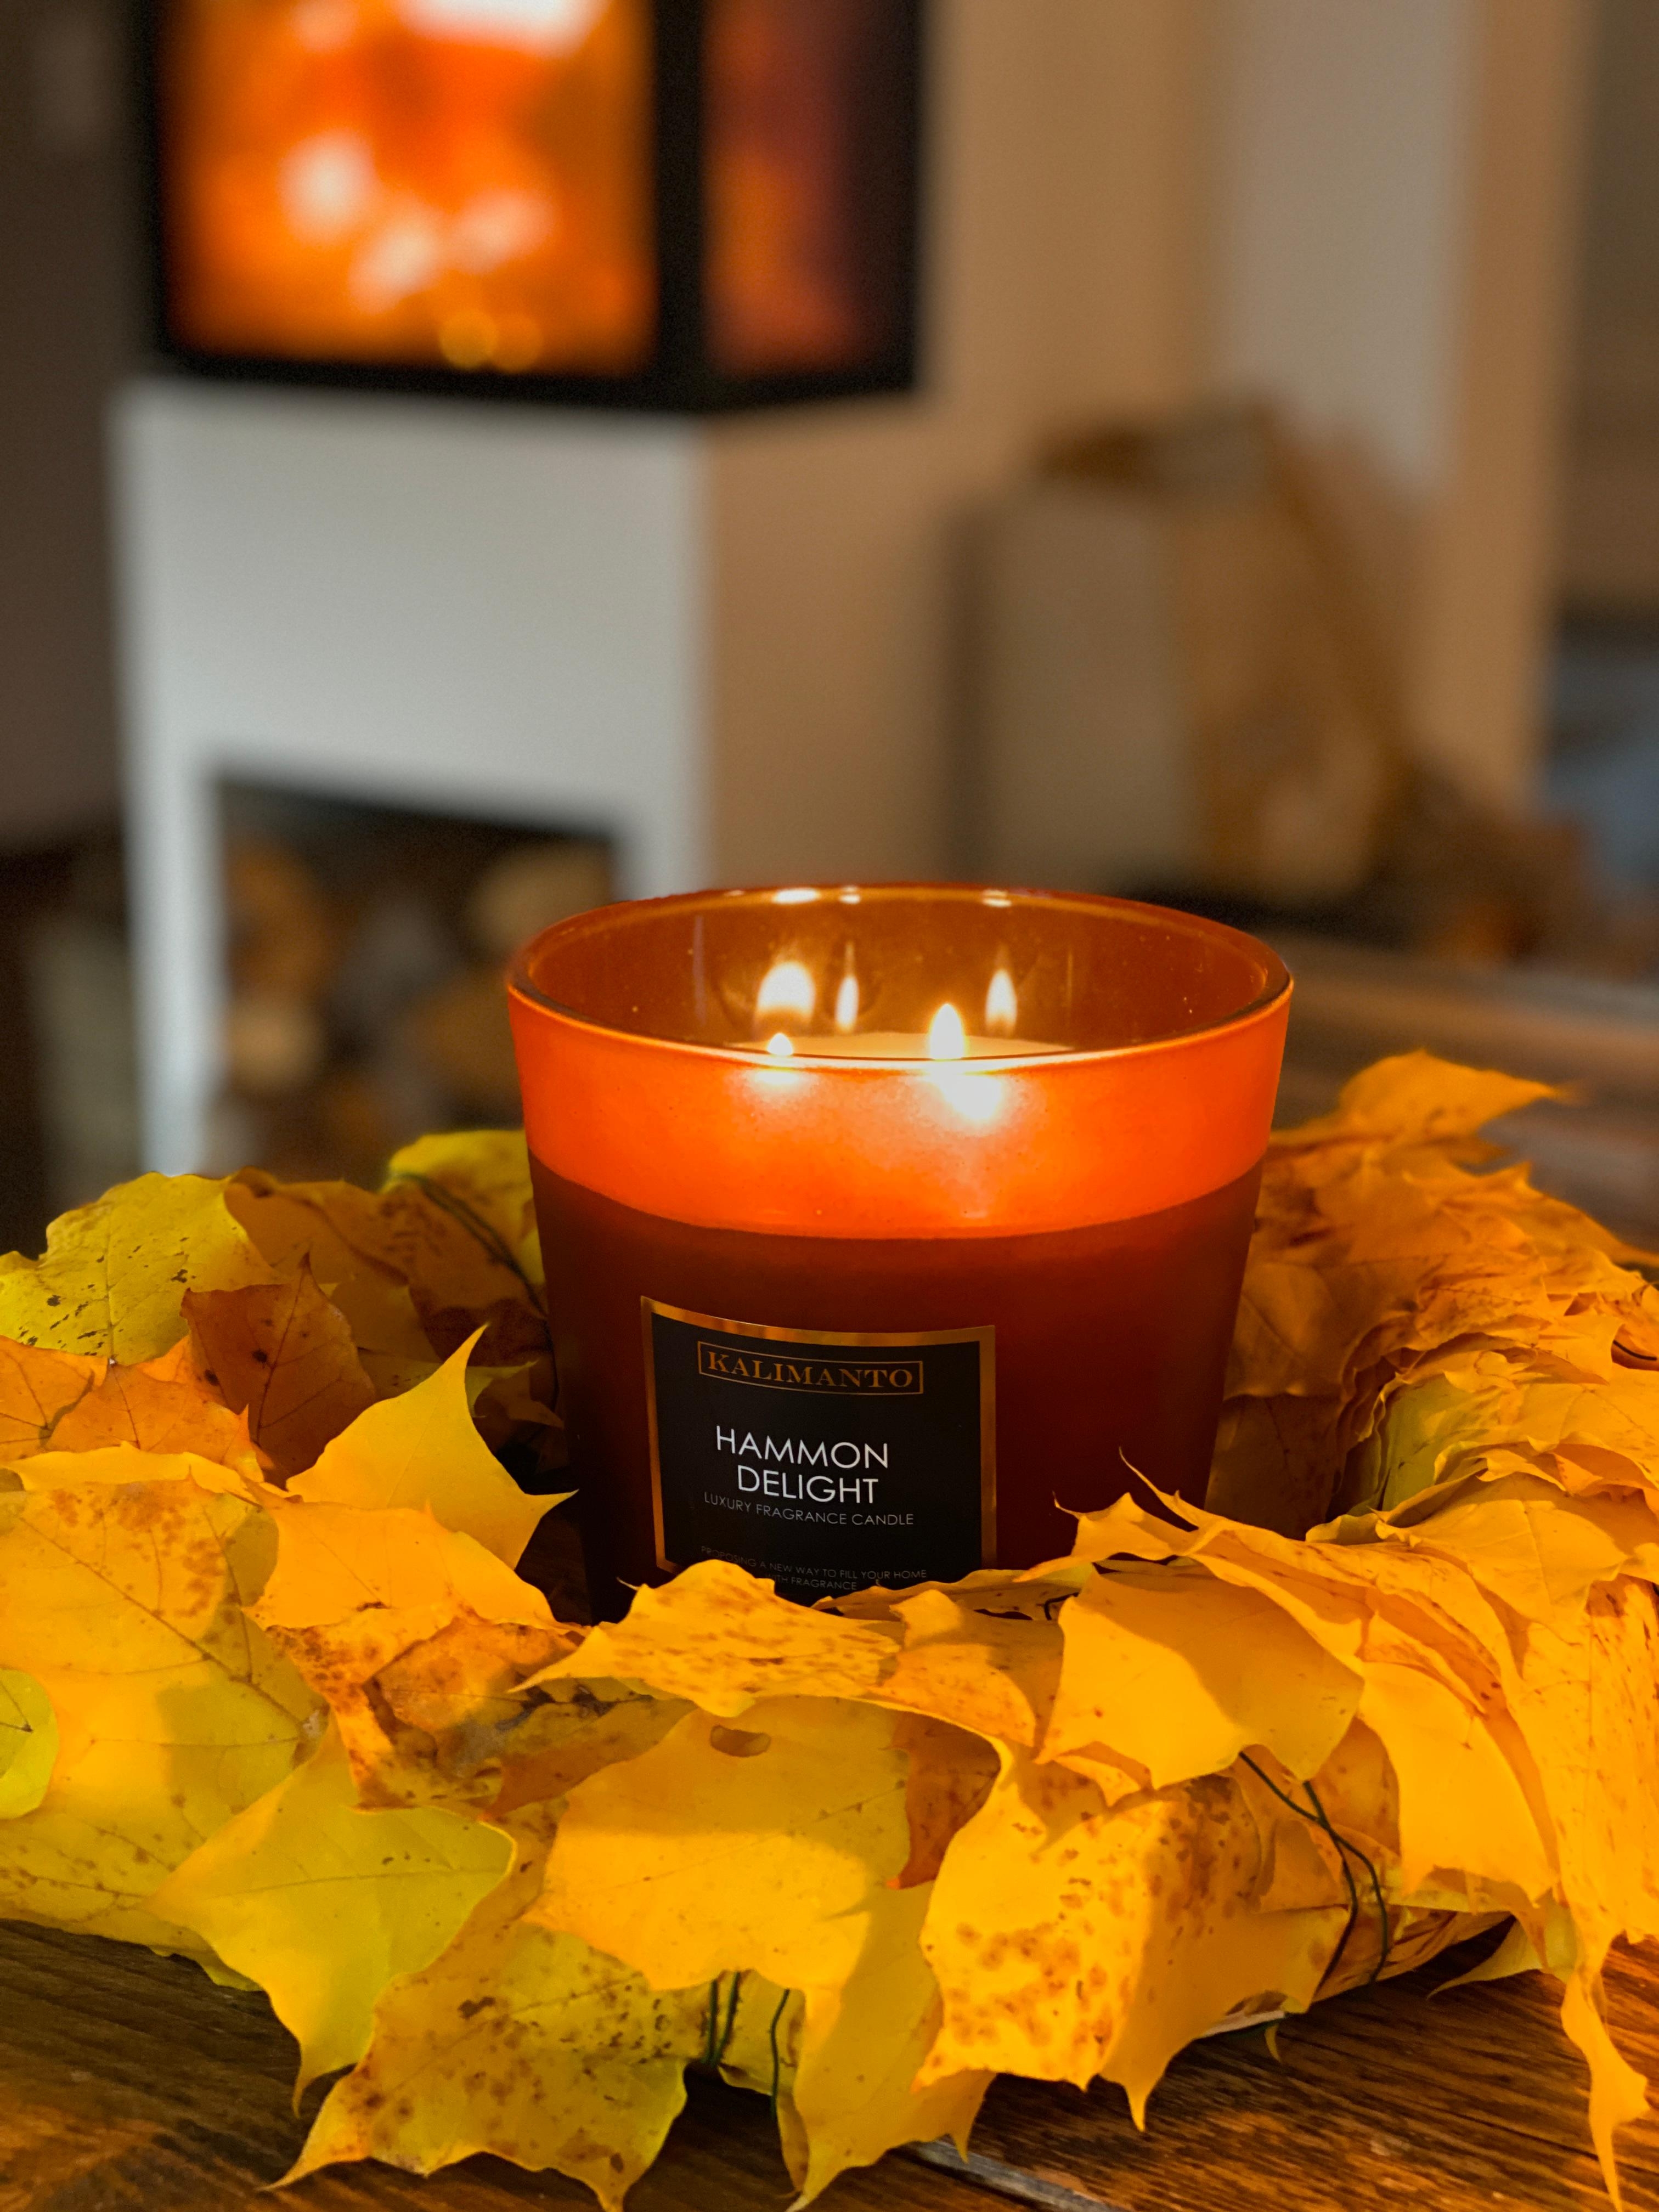 #Herbstdeko #herbst #herbst DIY
In warmen Tönen natürliche Herbstdeko 🍁🍁🍁

